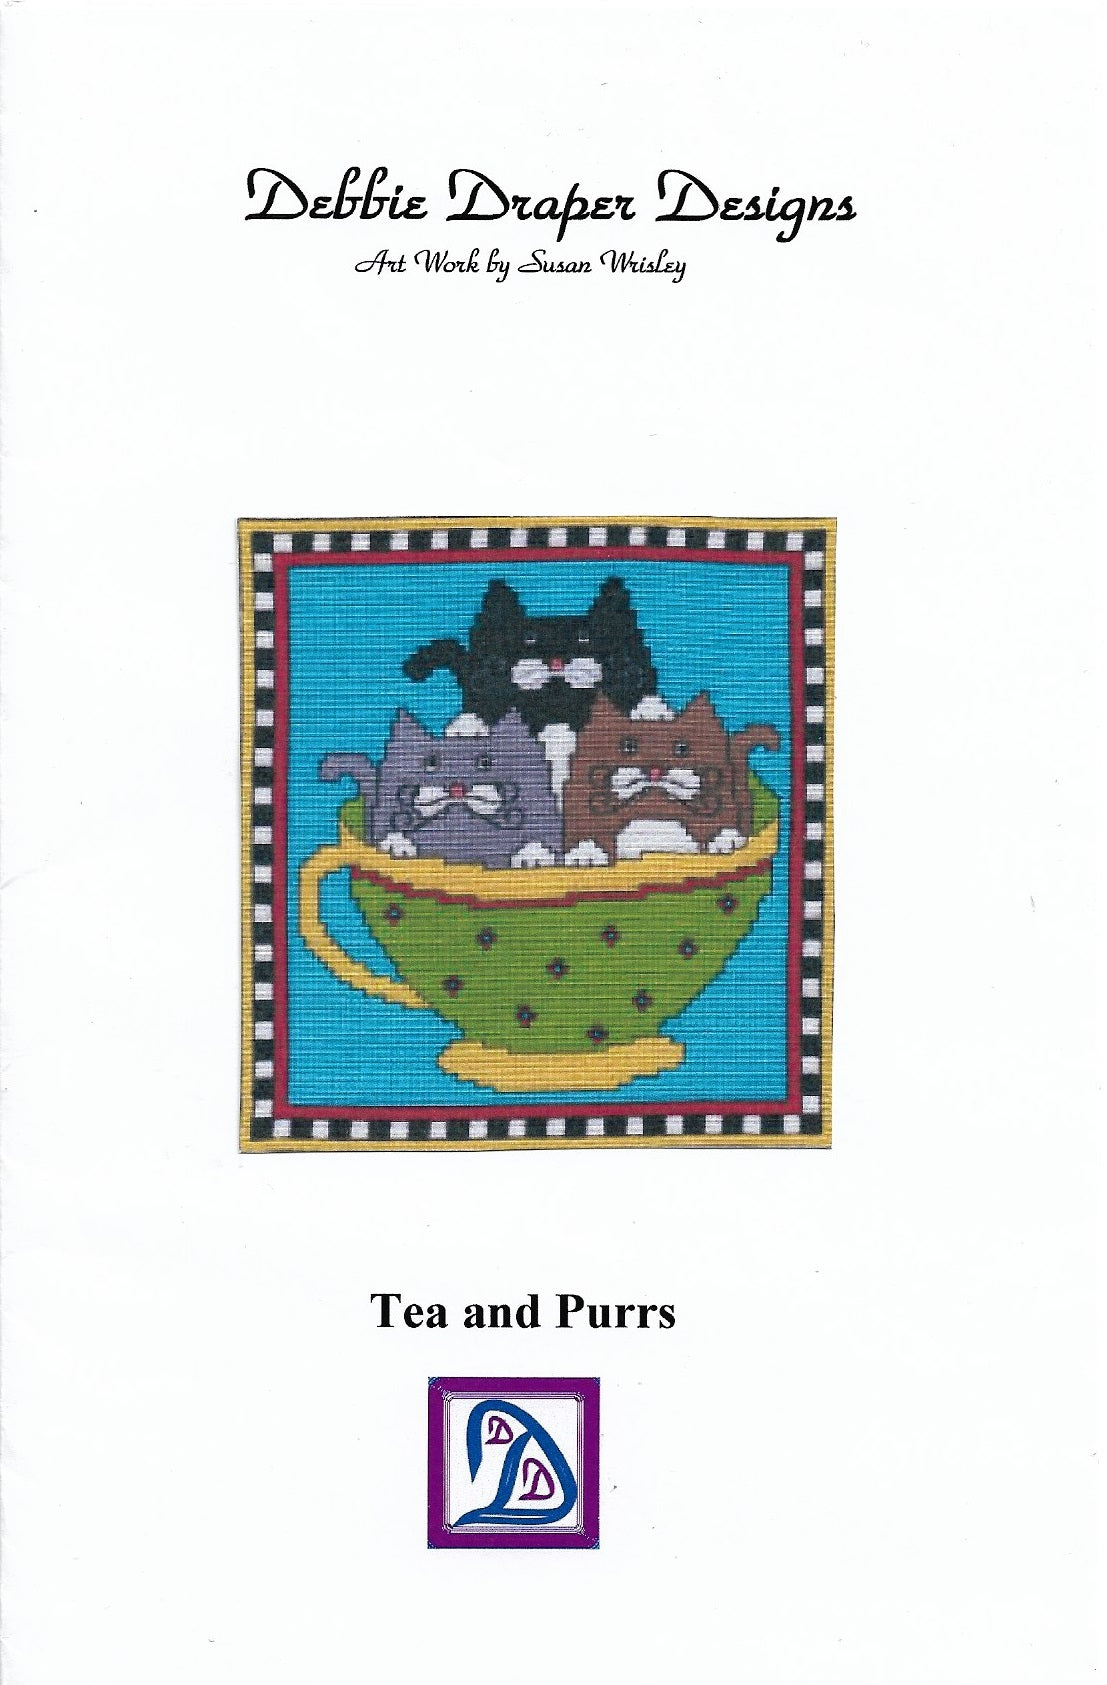 Debbie Draper Designs Tea and Purrs cross stitch pattern